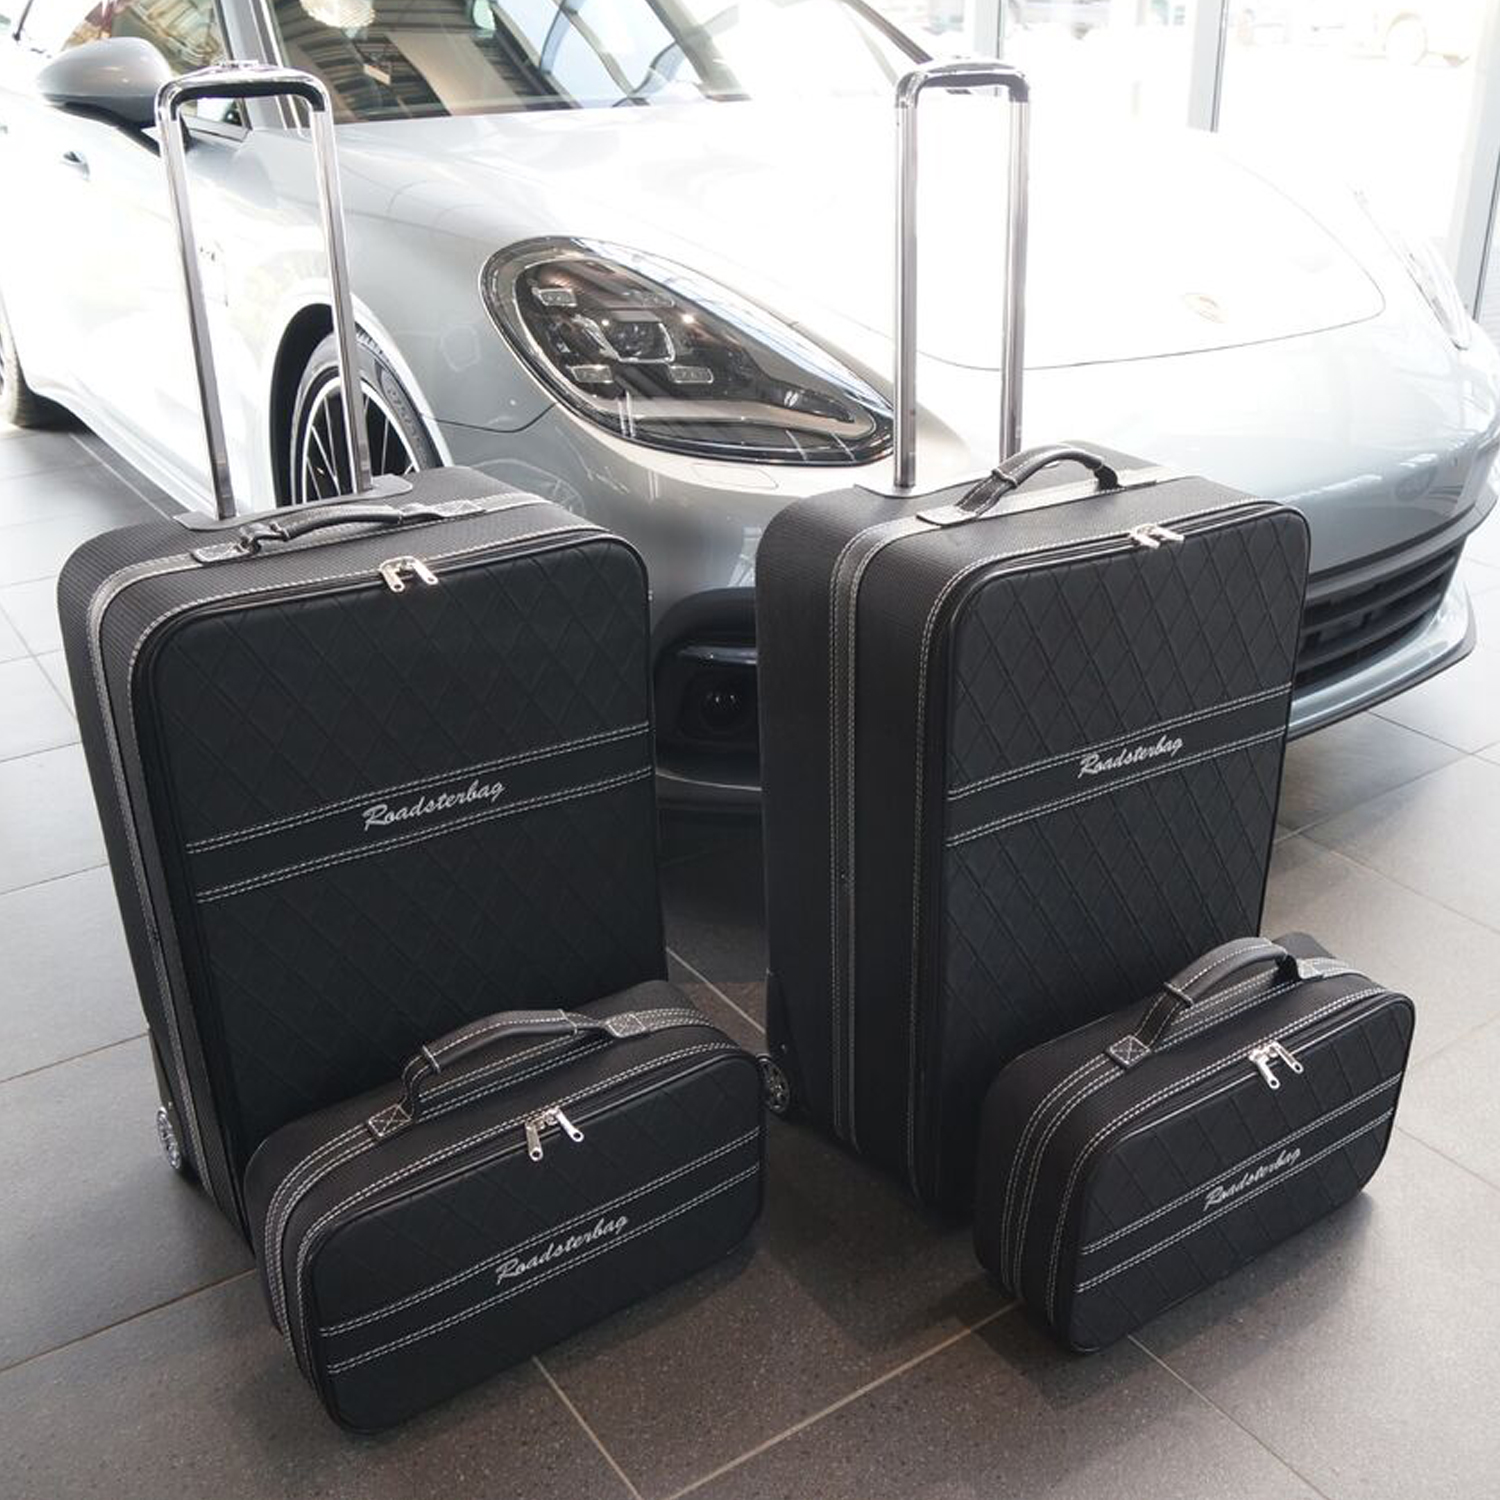 Hybrid Luggage Valise jumbo, gris, XL